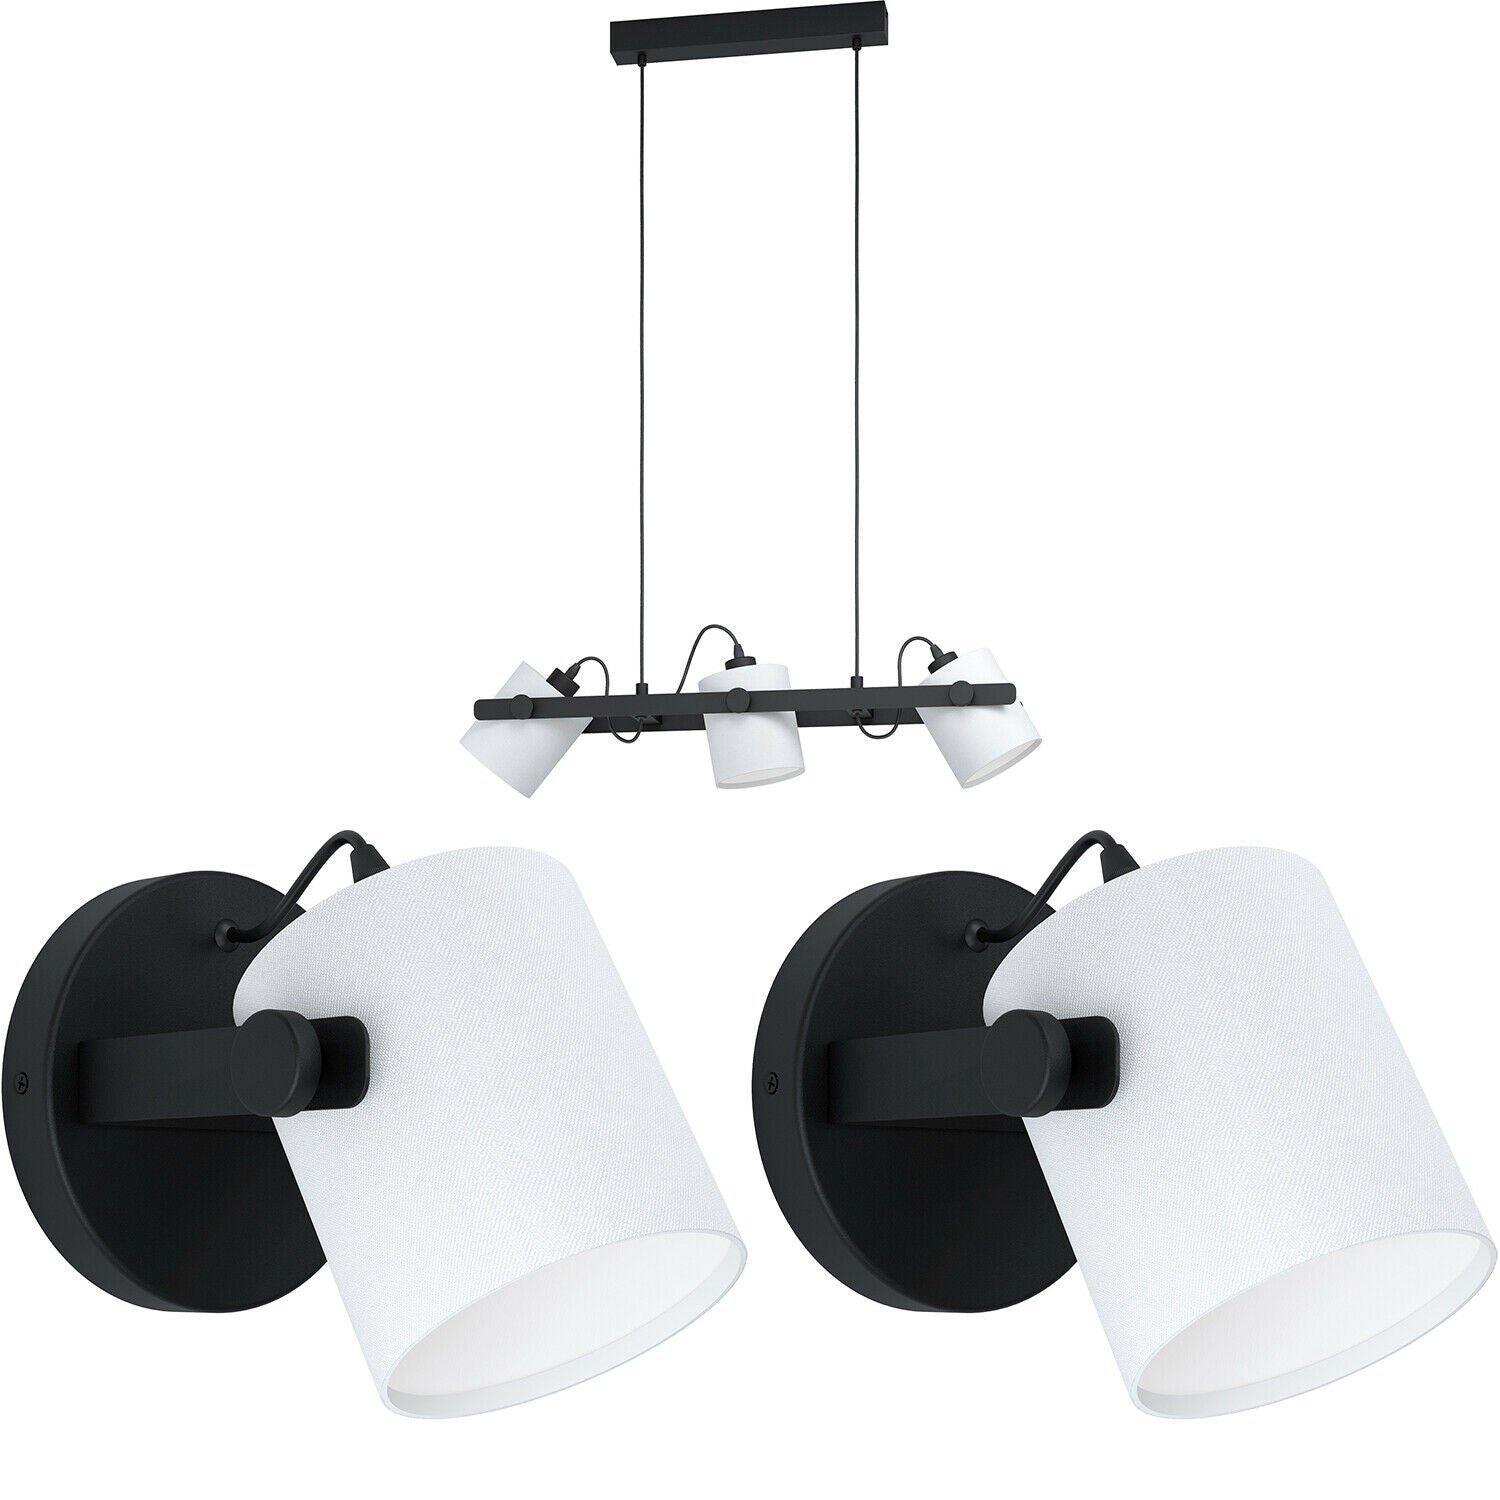 Ceiling Pendant Light & 2x Matching Wall Lights Black & White Adjustable Shade